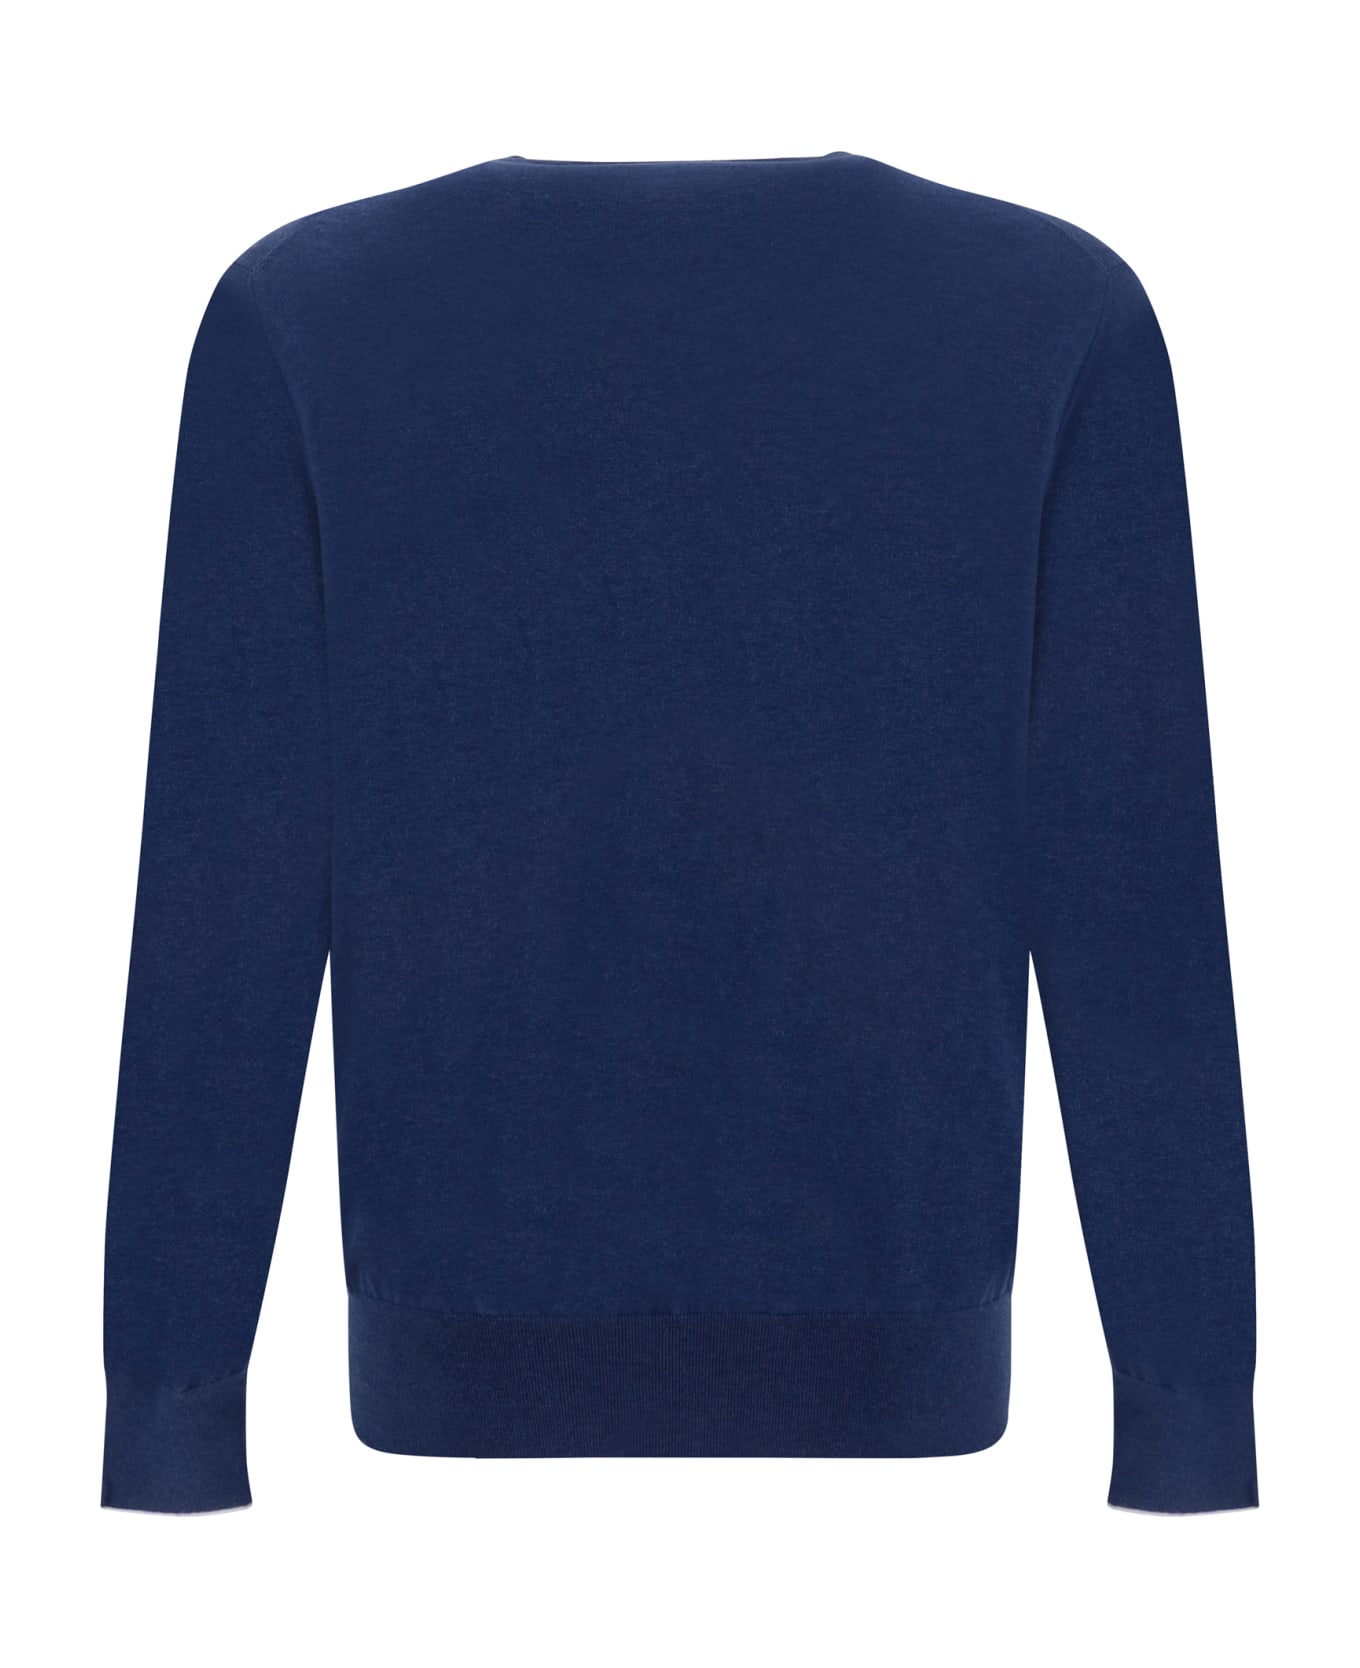 Cruciani Sweater - 41e80014 フリース